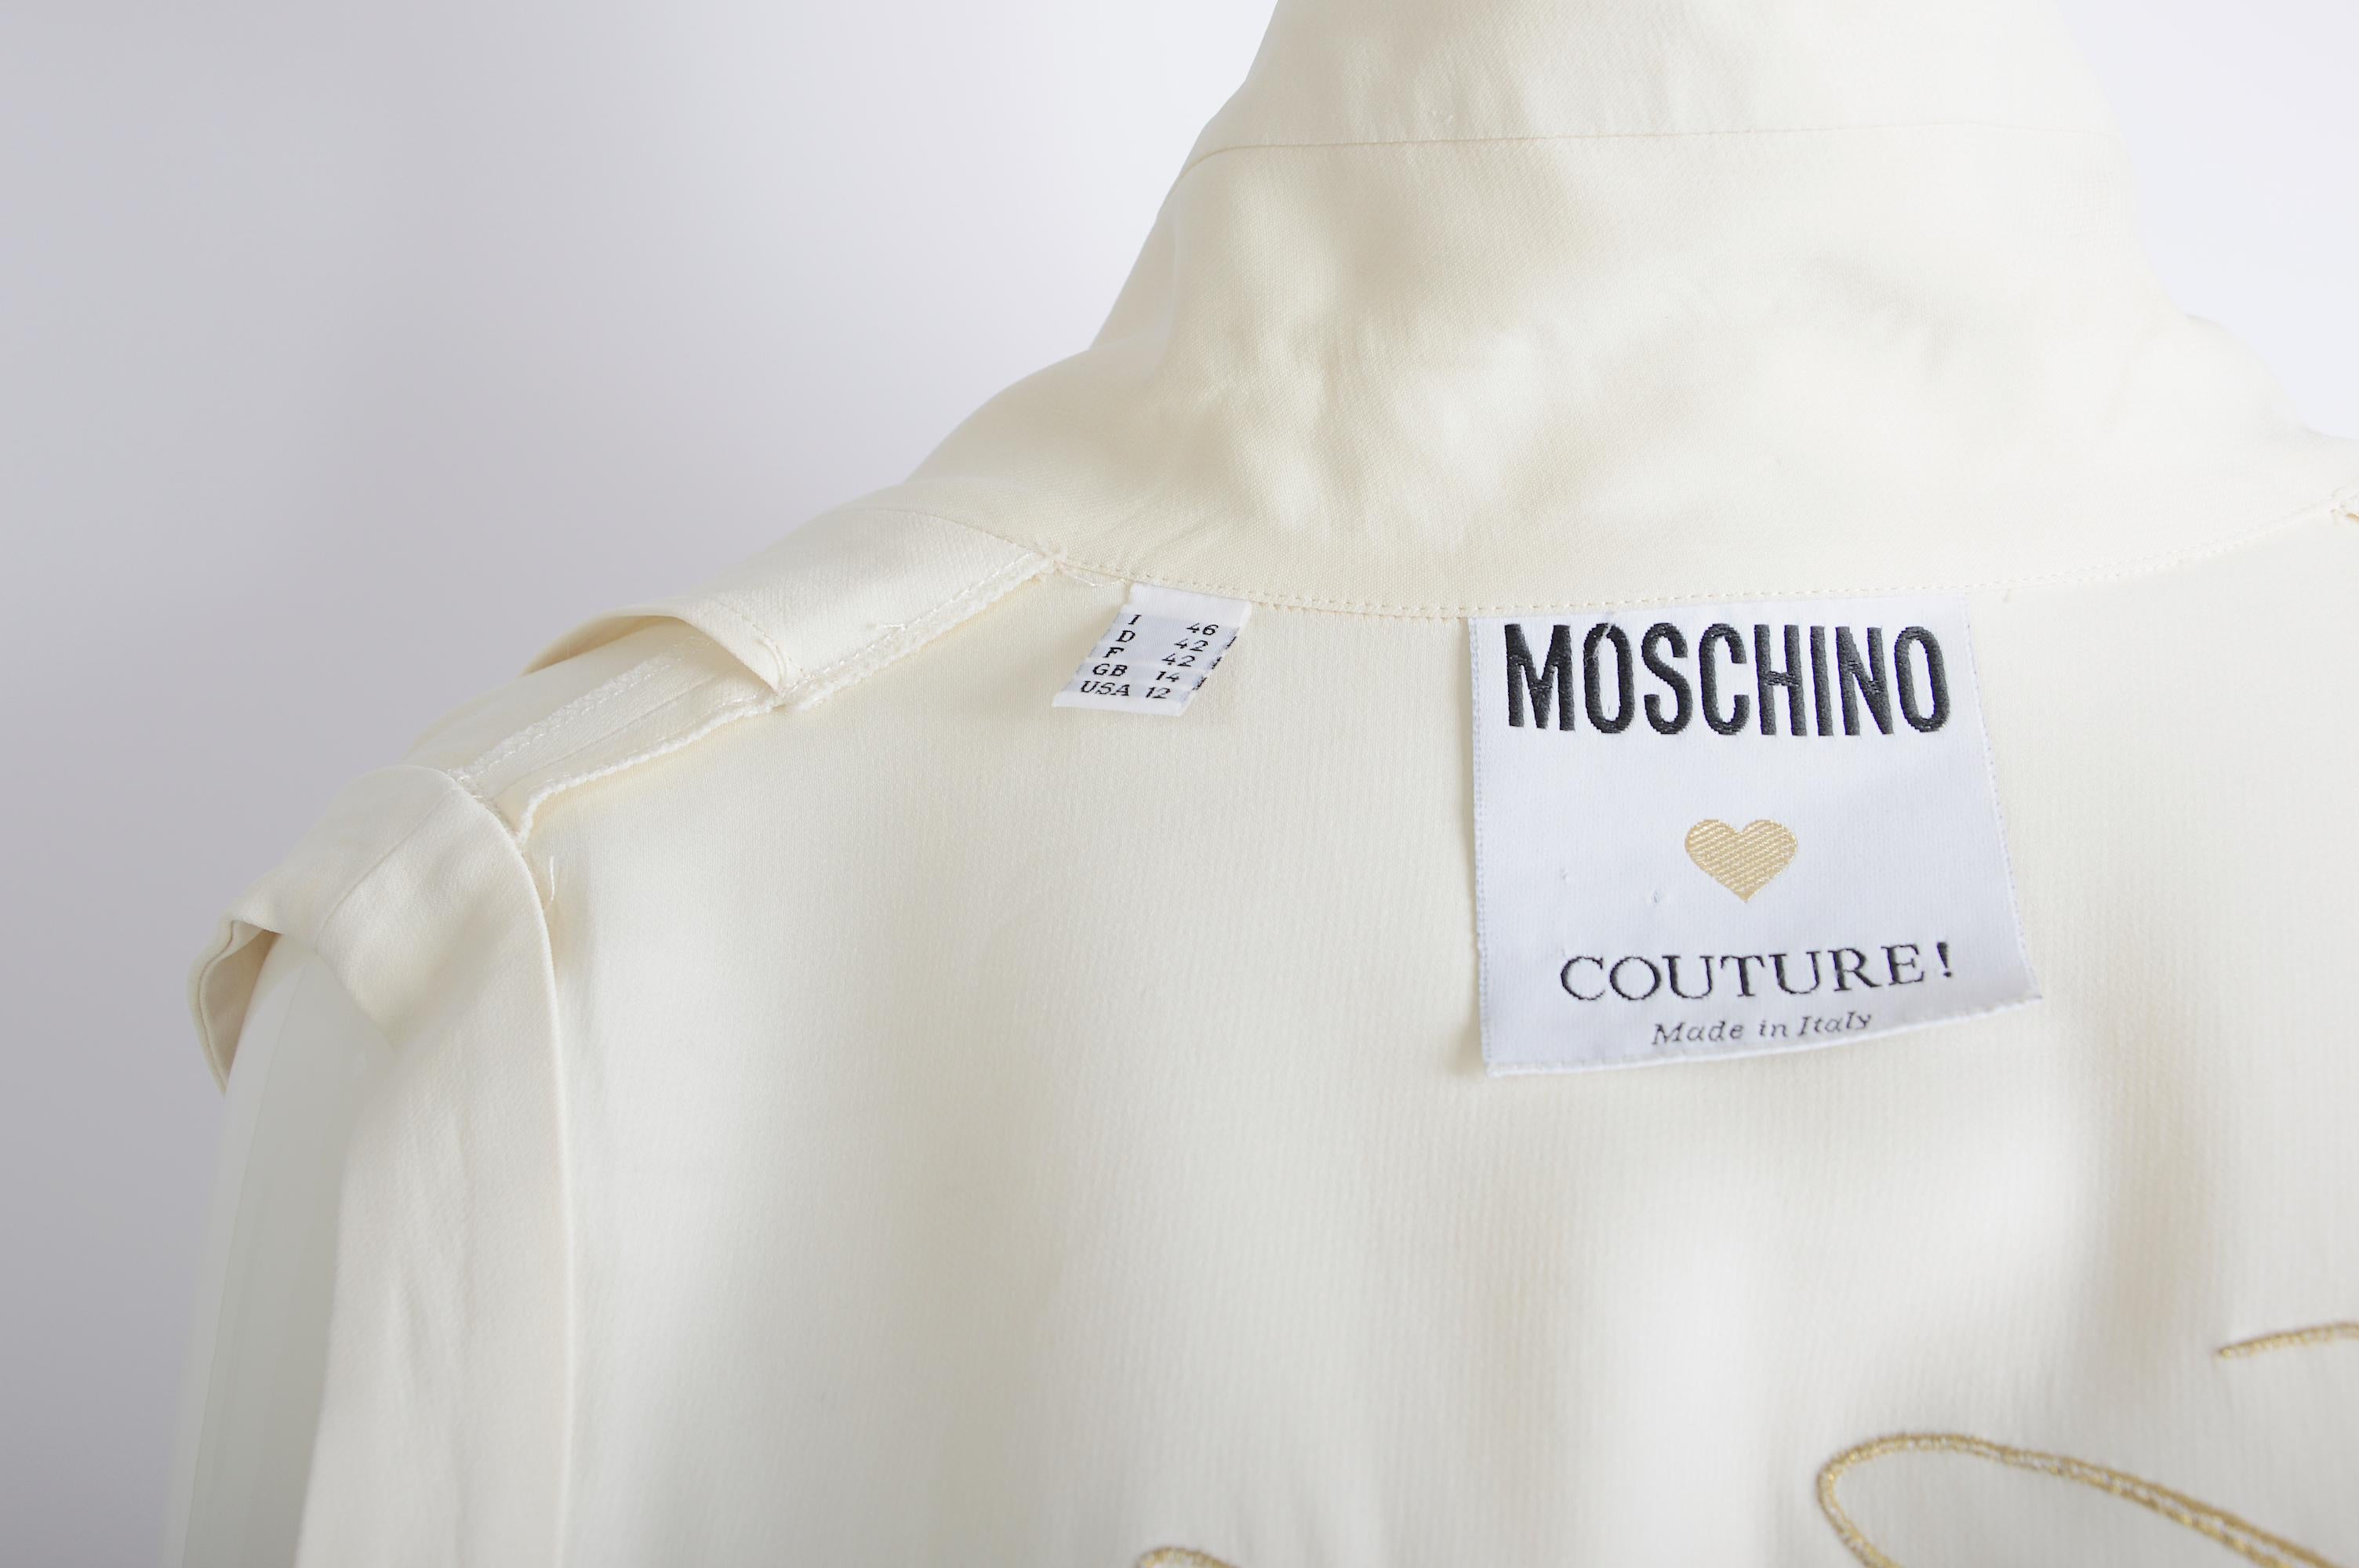  Moschino Couture collectionneur de collection vintage embelli « Cash coeur » crème en vente 7